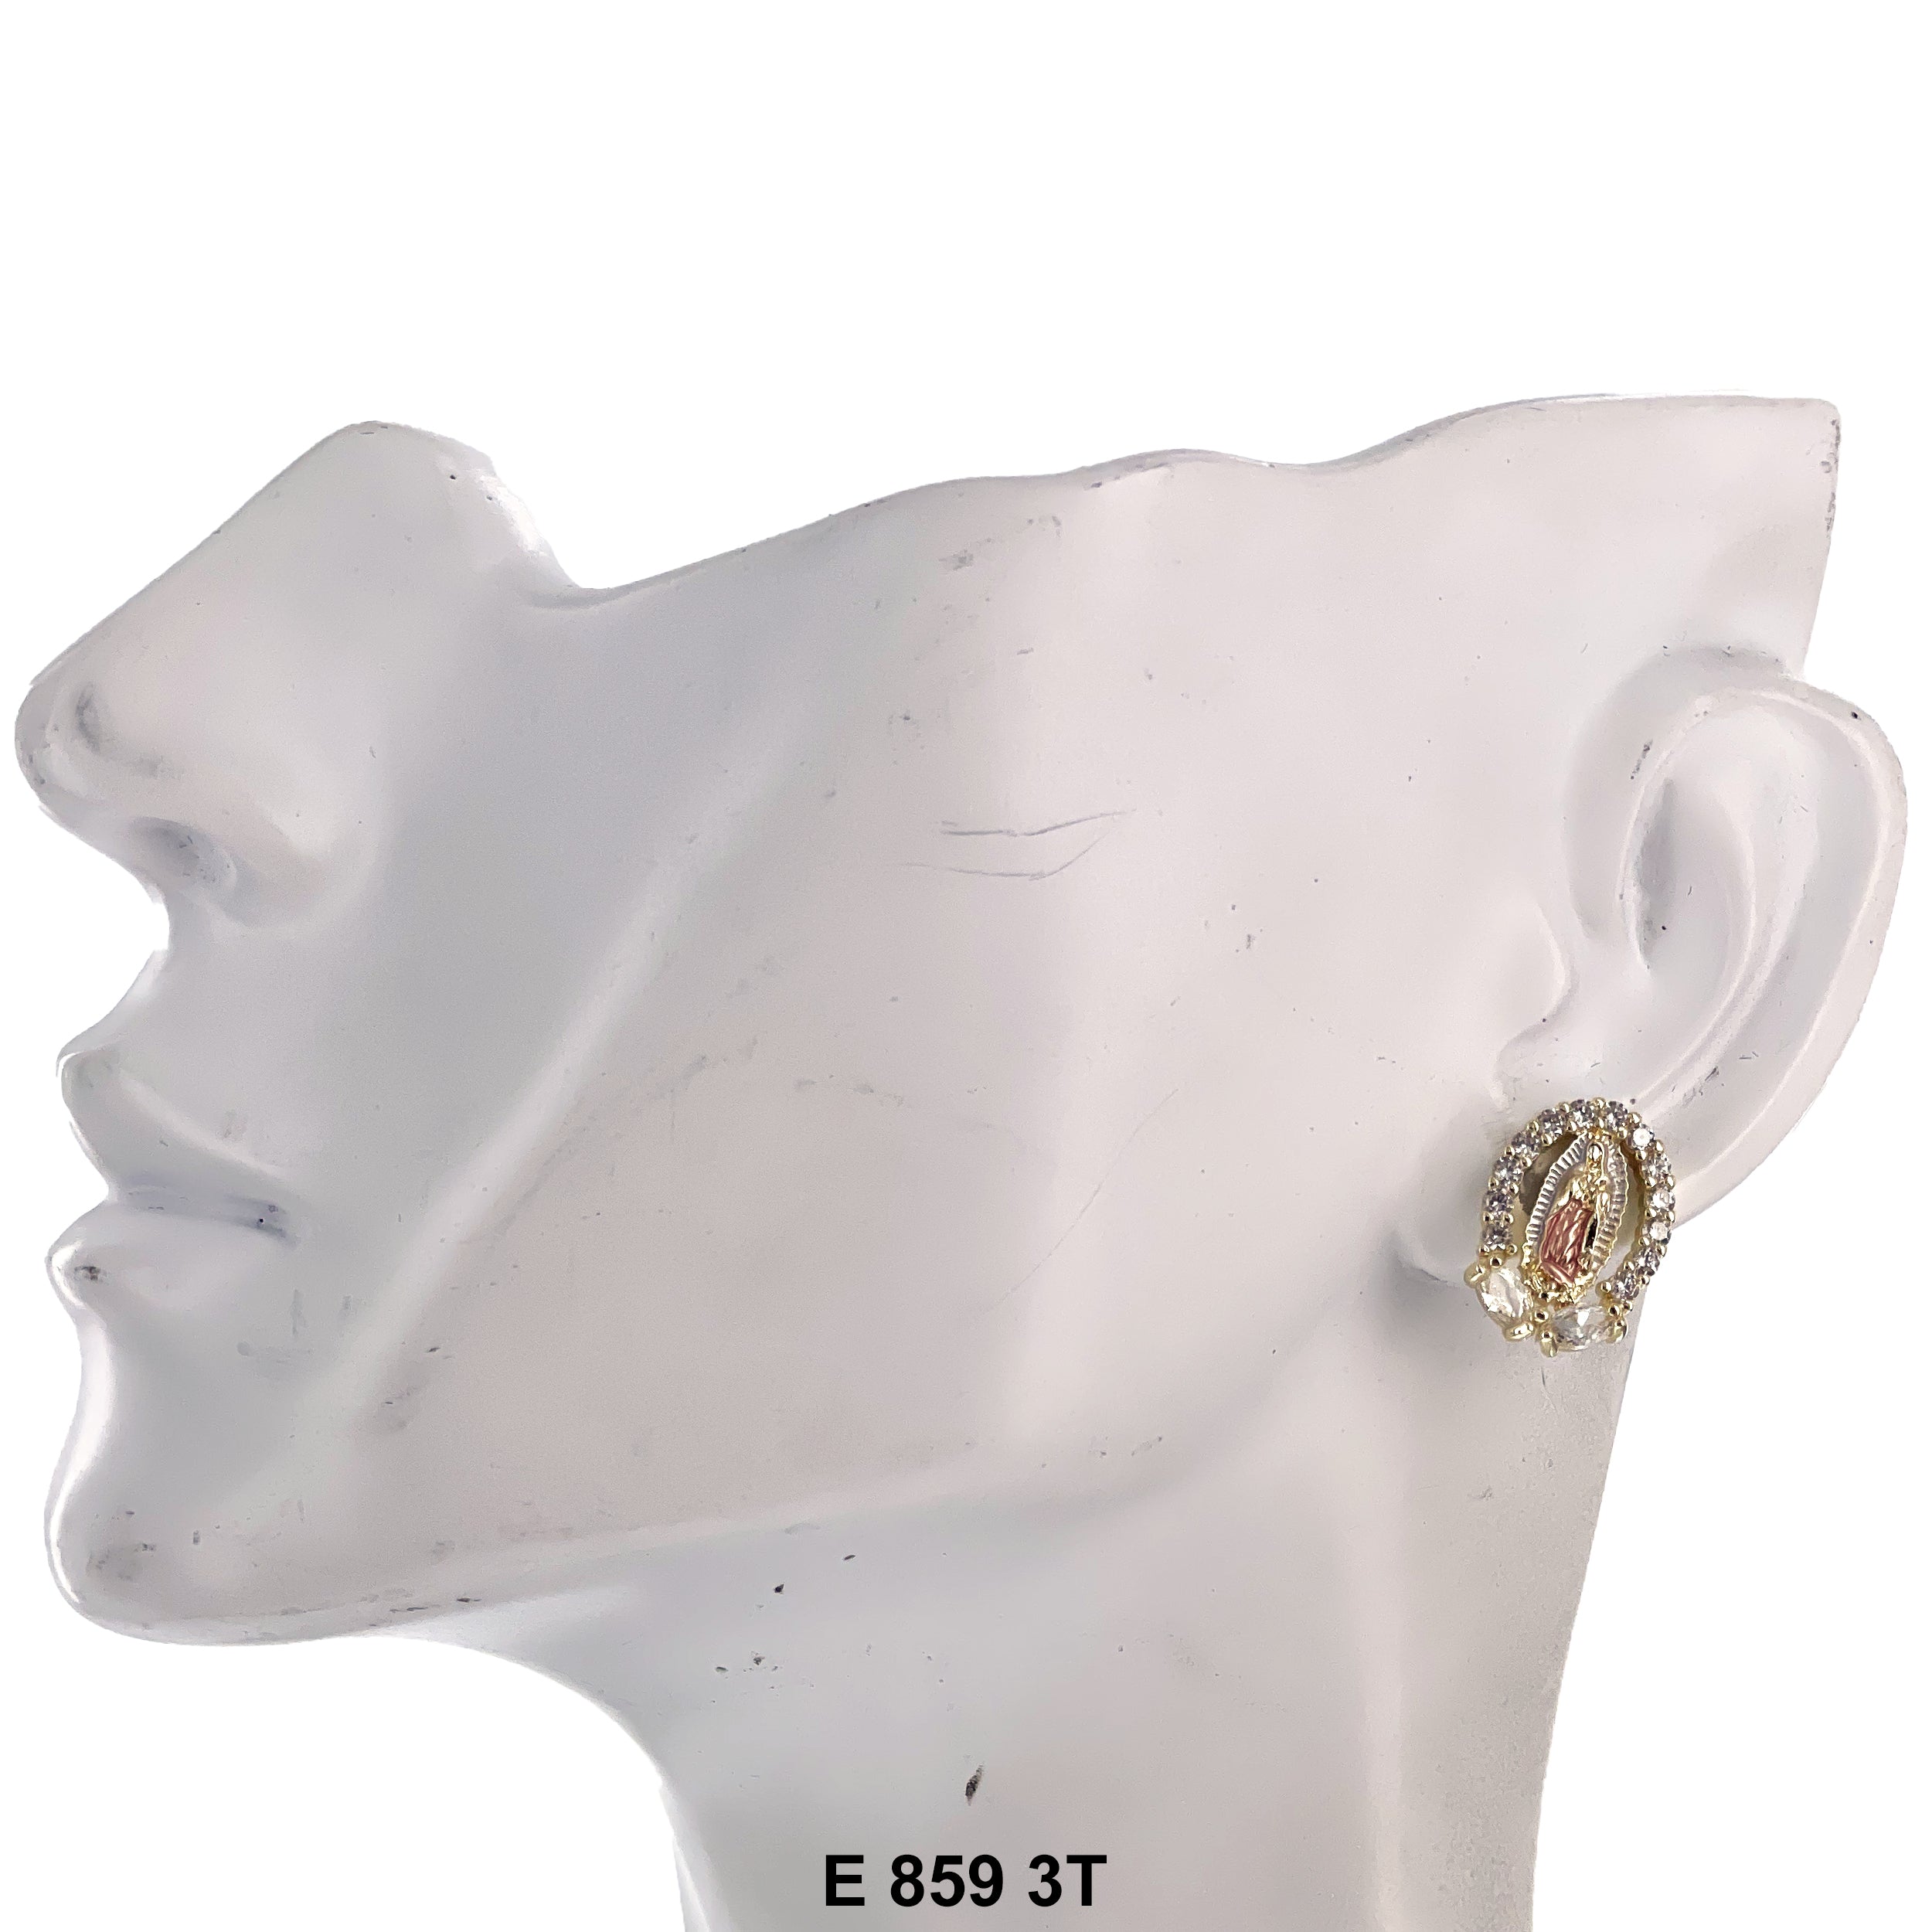 Guadalupe Stud Earrings E 859 3T